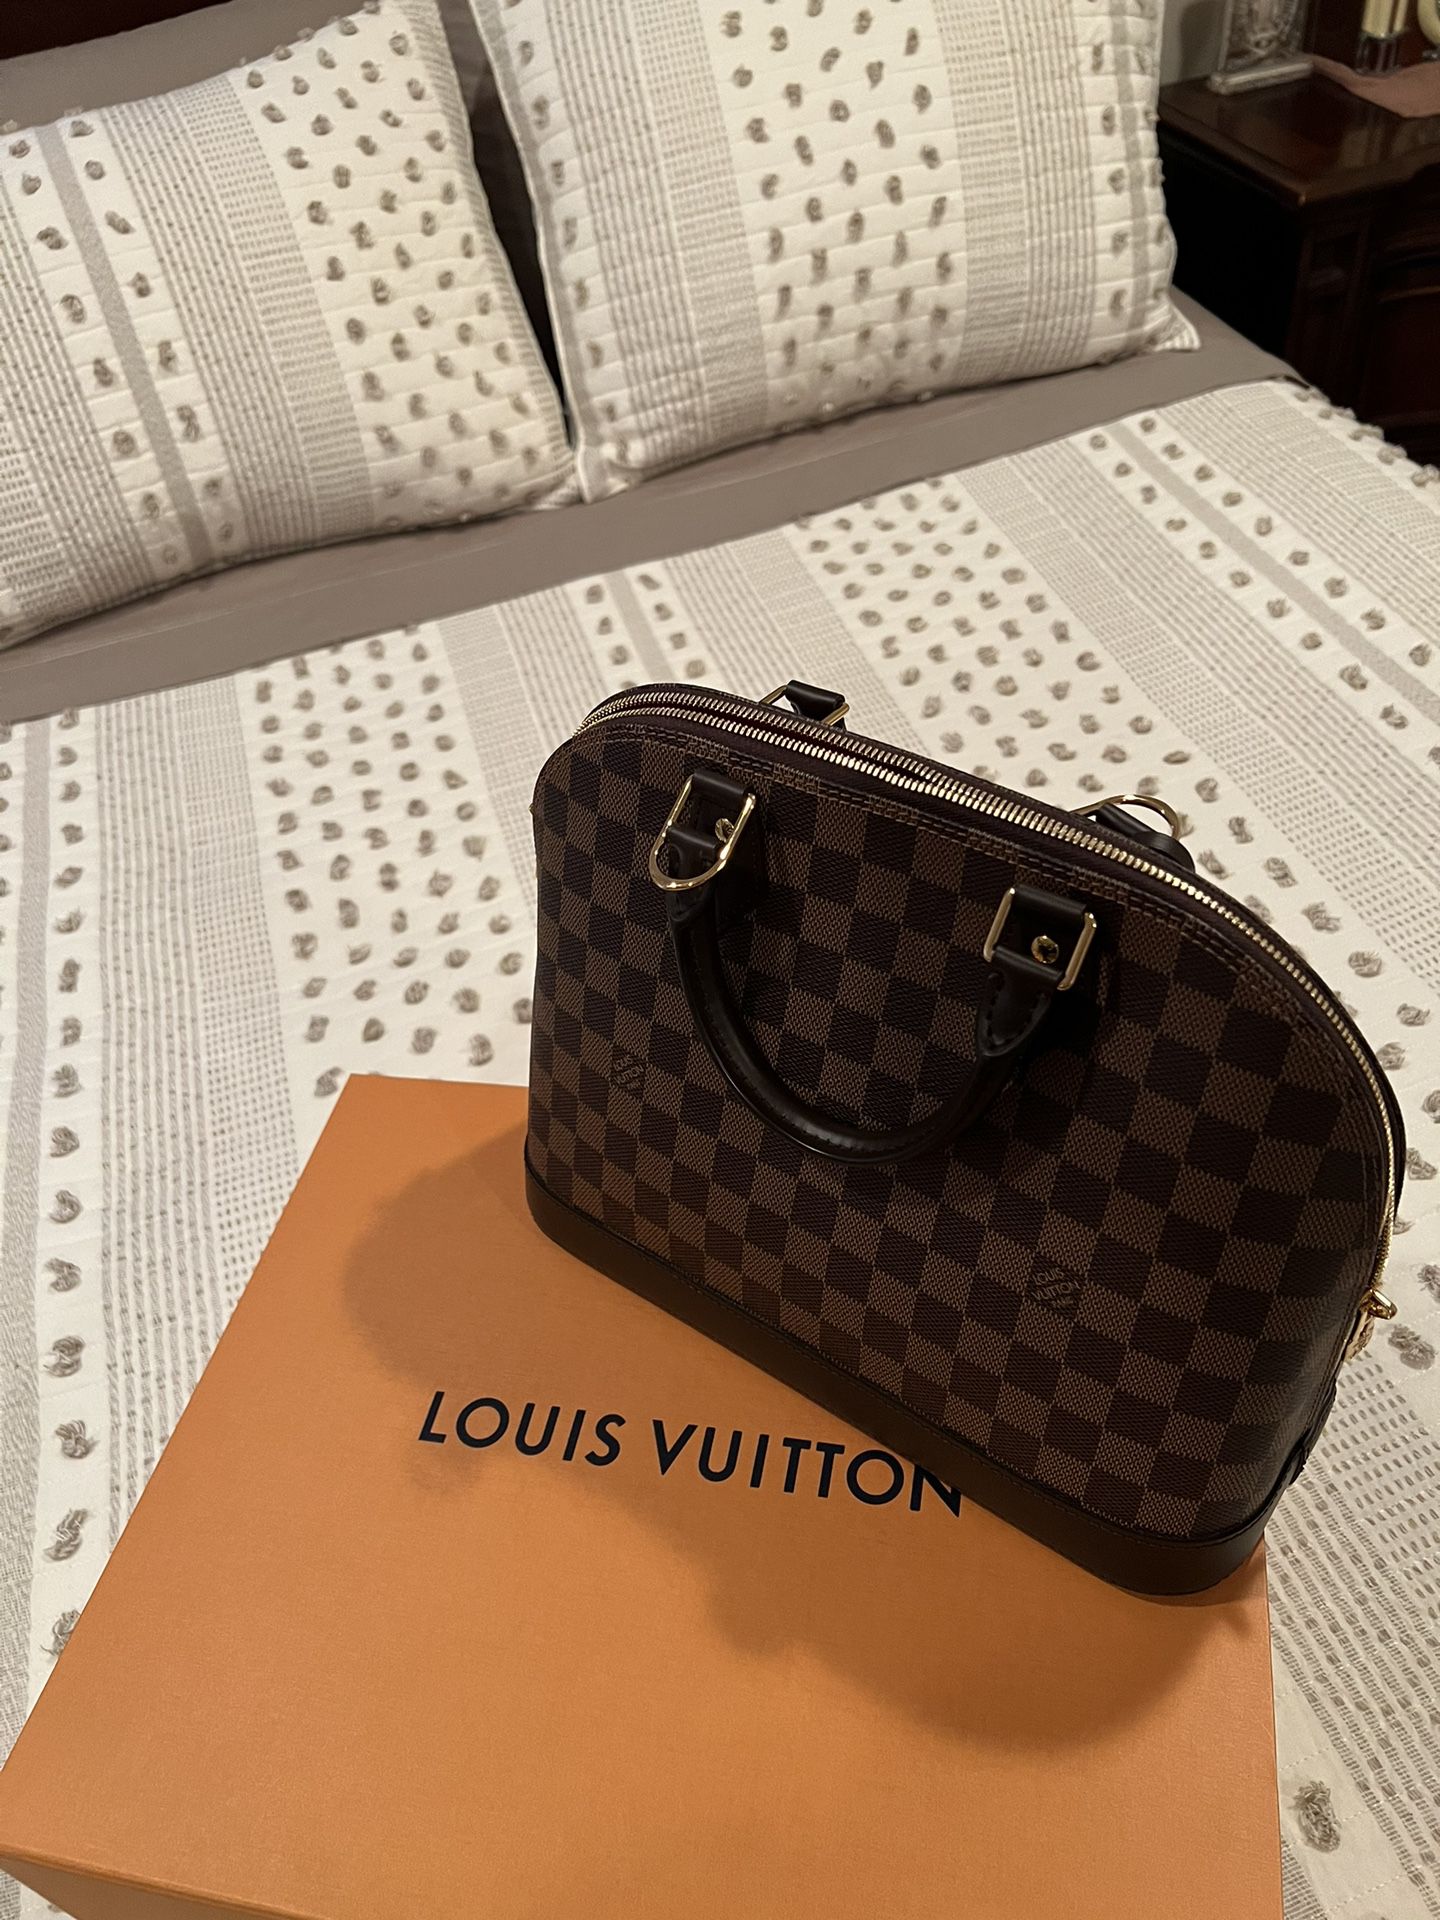 Brand new Louis Vuitton bag